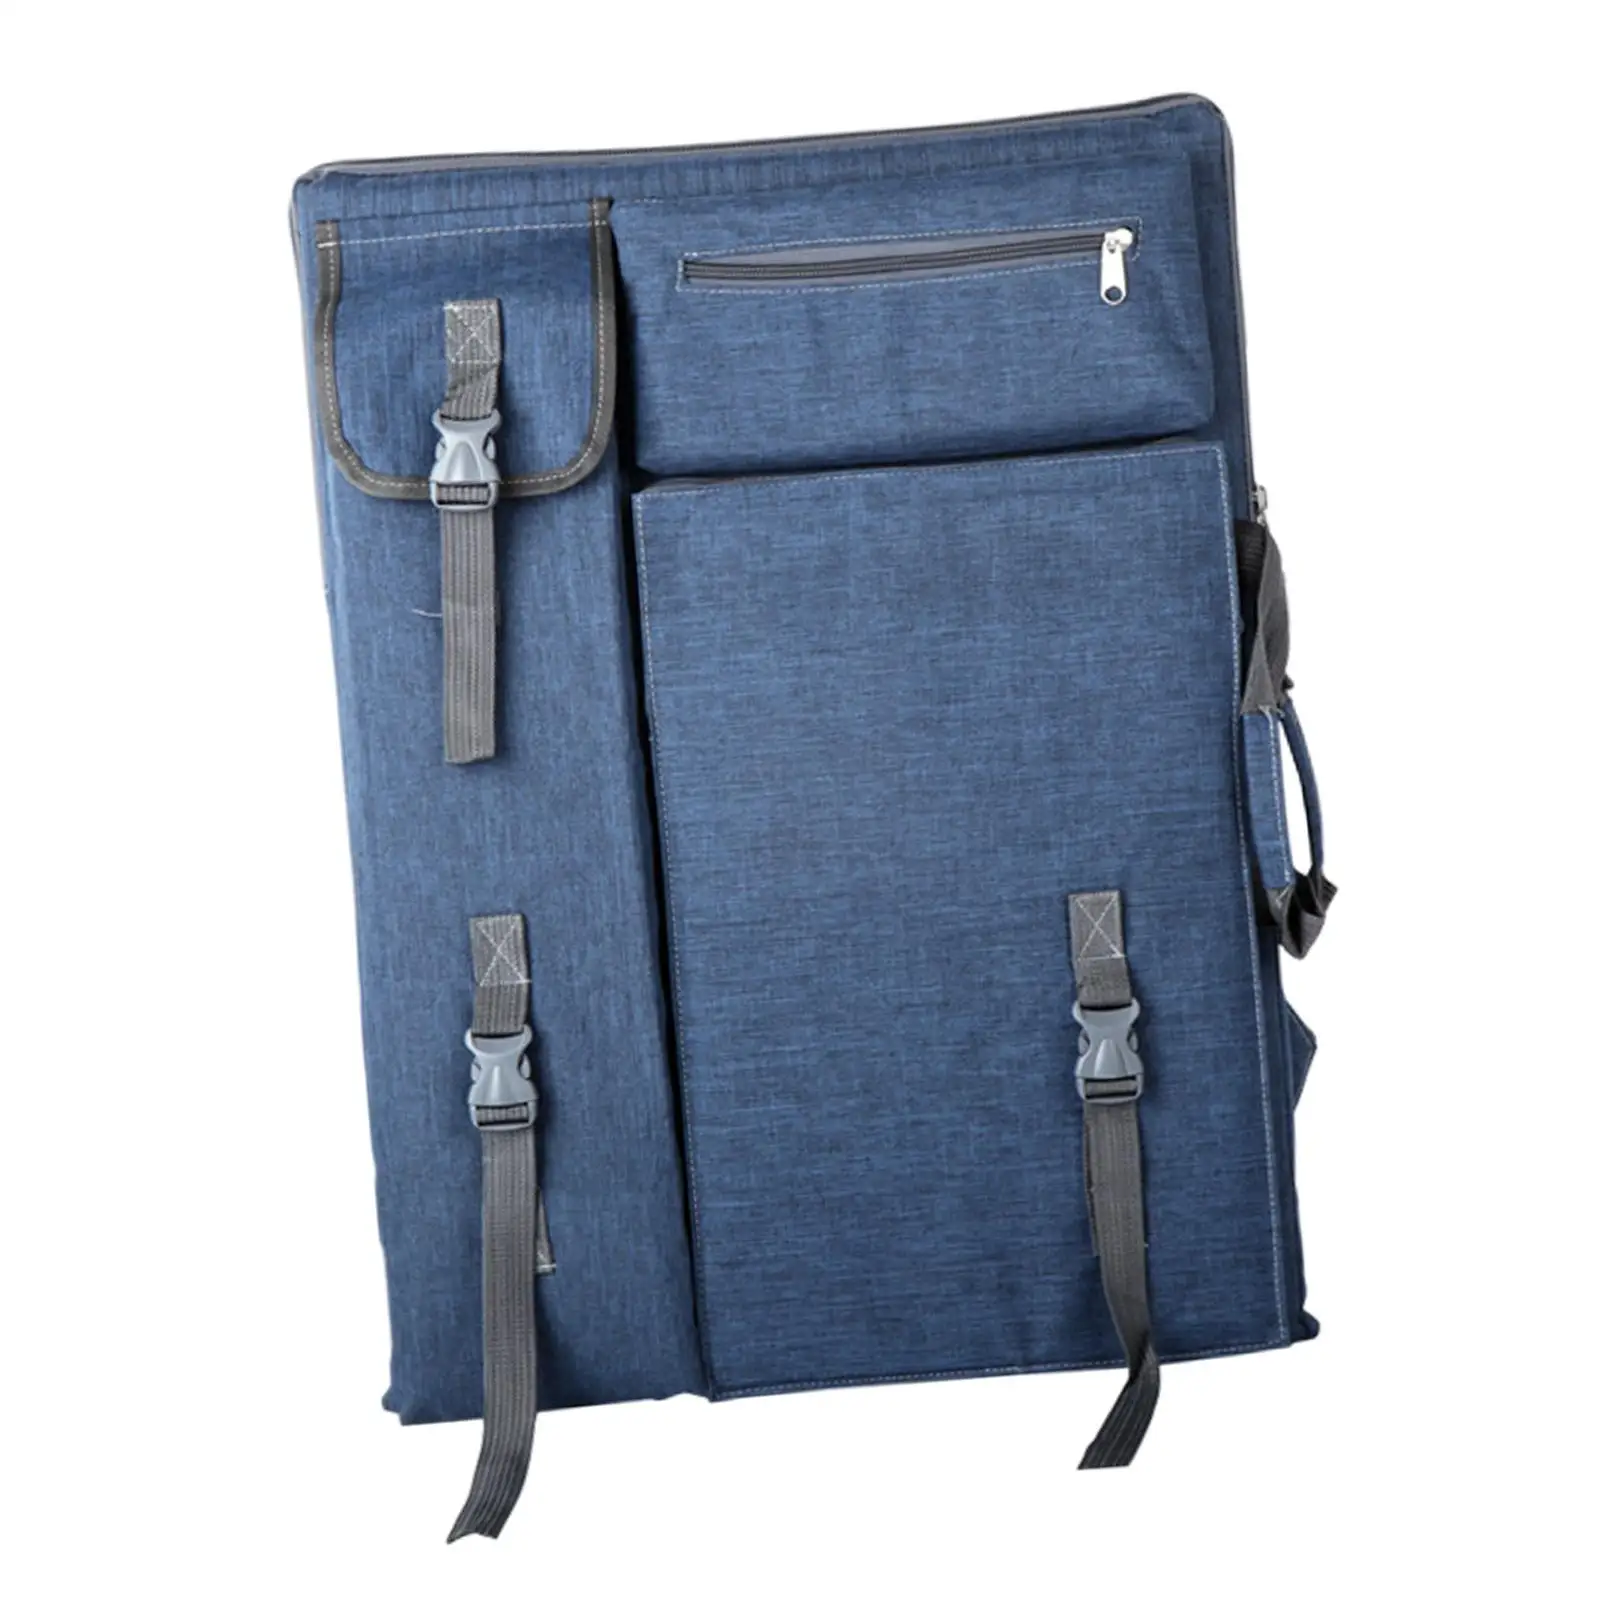 Art Portfolio Case Waterproof Portable Practical Lightweight Hobbyist Sketching Art Carry Bag Backpack Drawing Board Bag